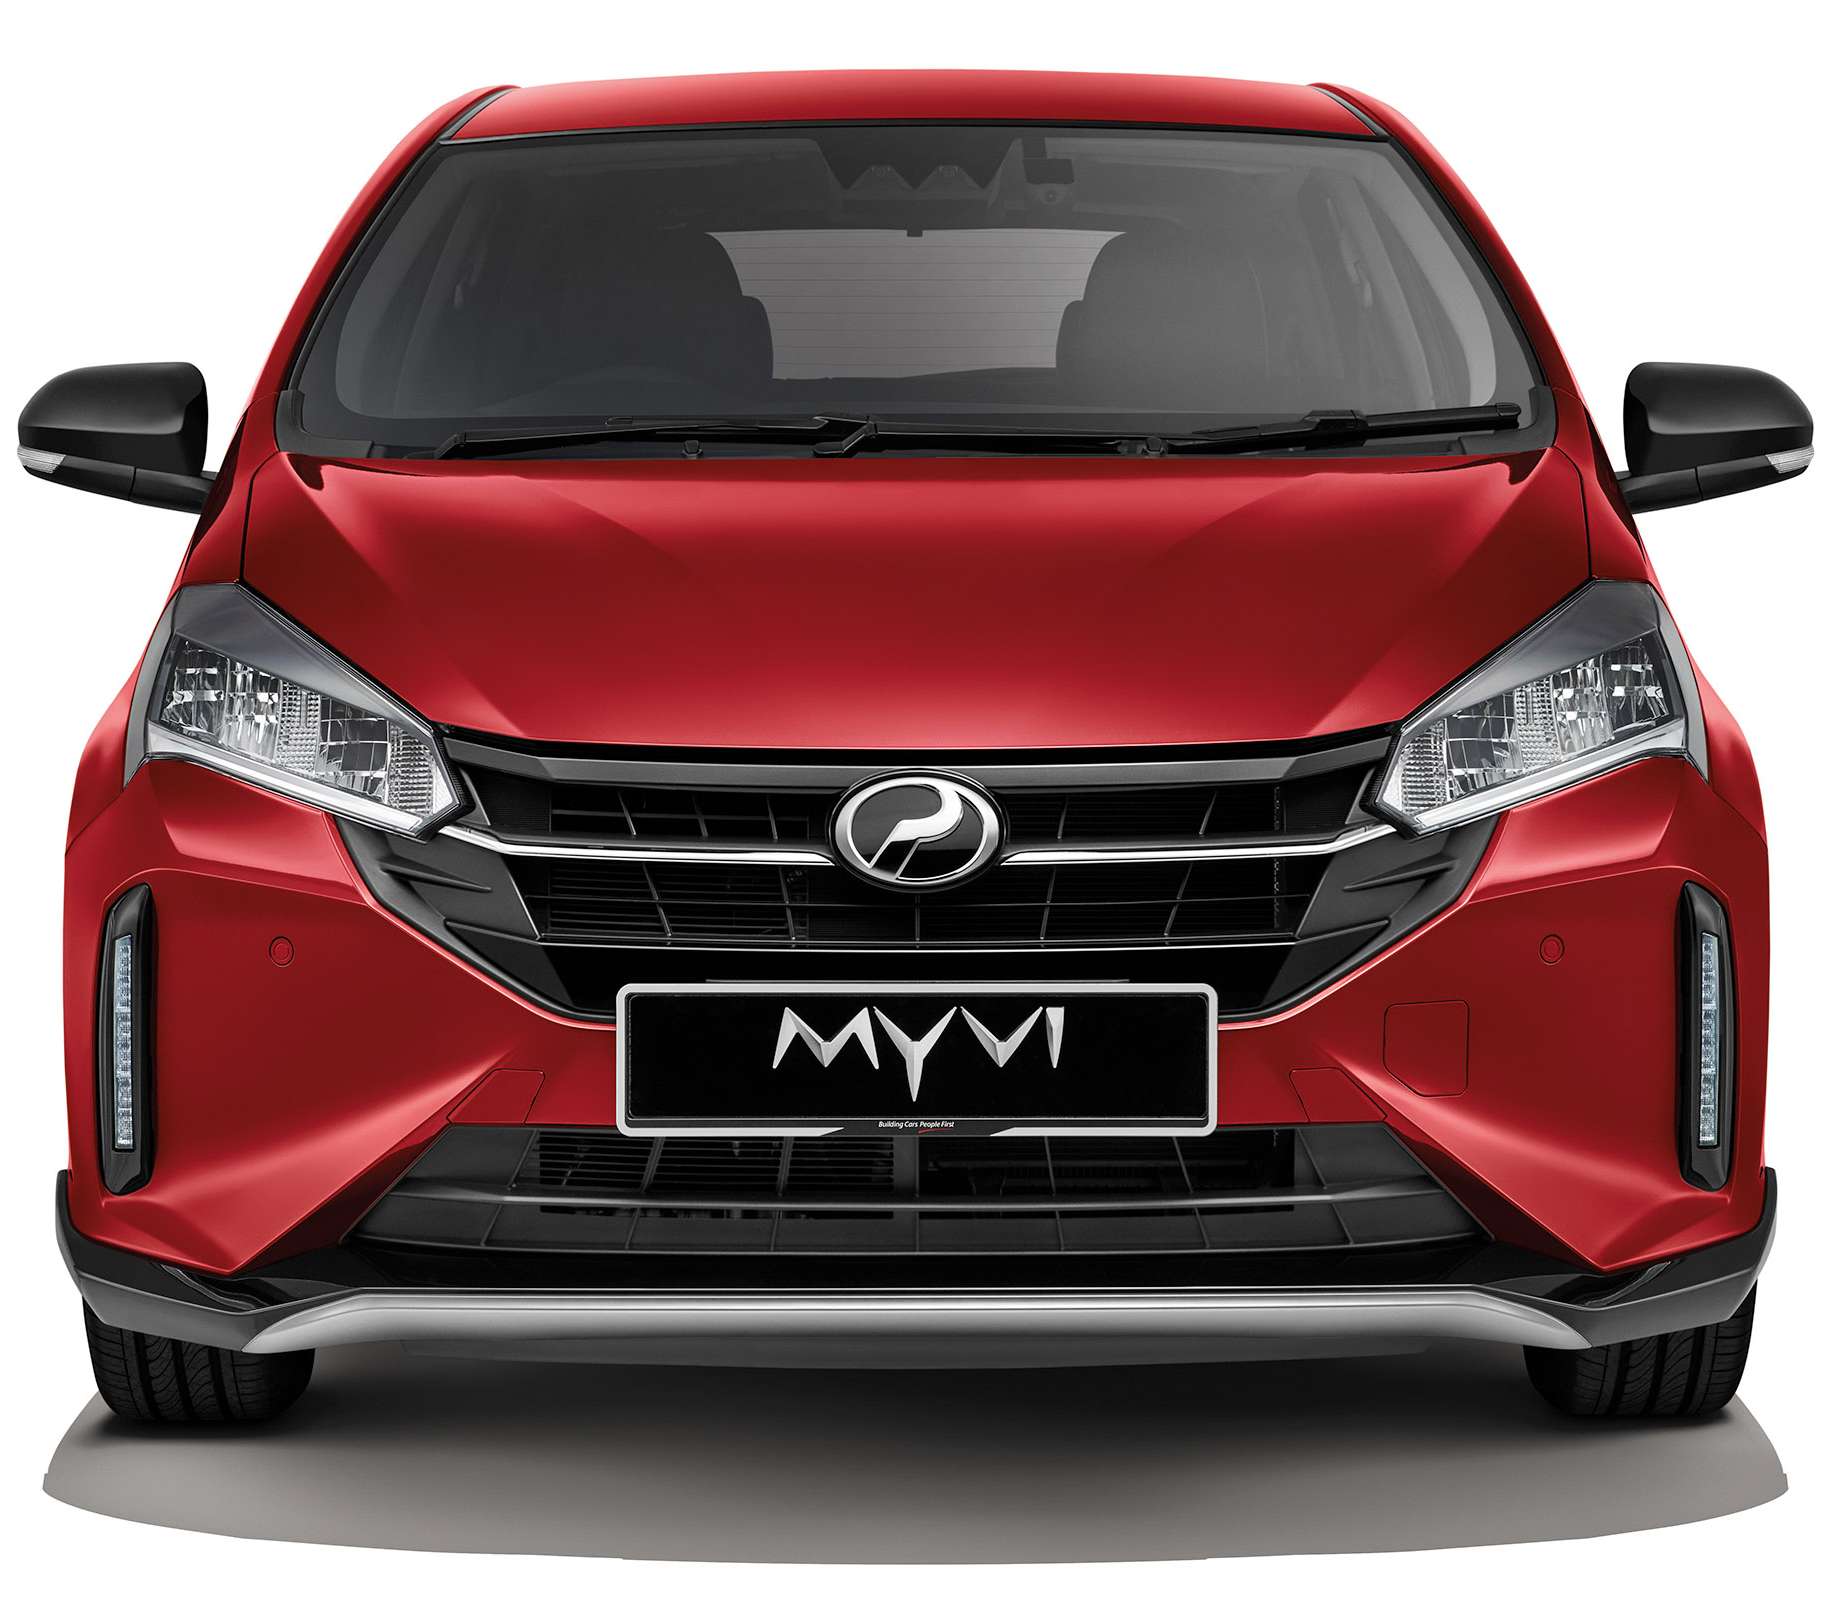 2022 Perodua Myvi facelift-1.5 AV-Malaysia-official-5